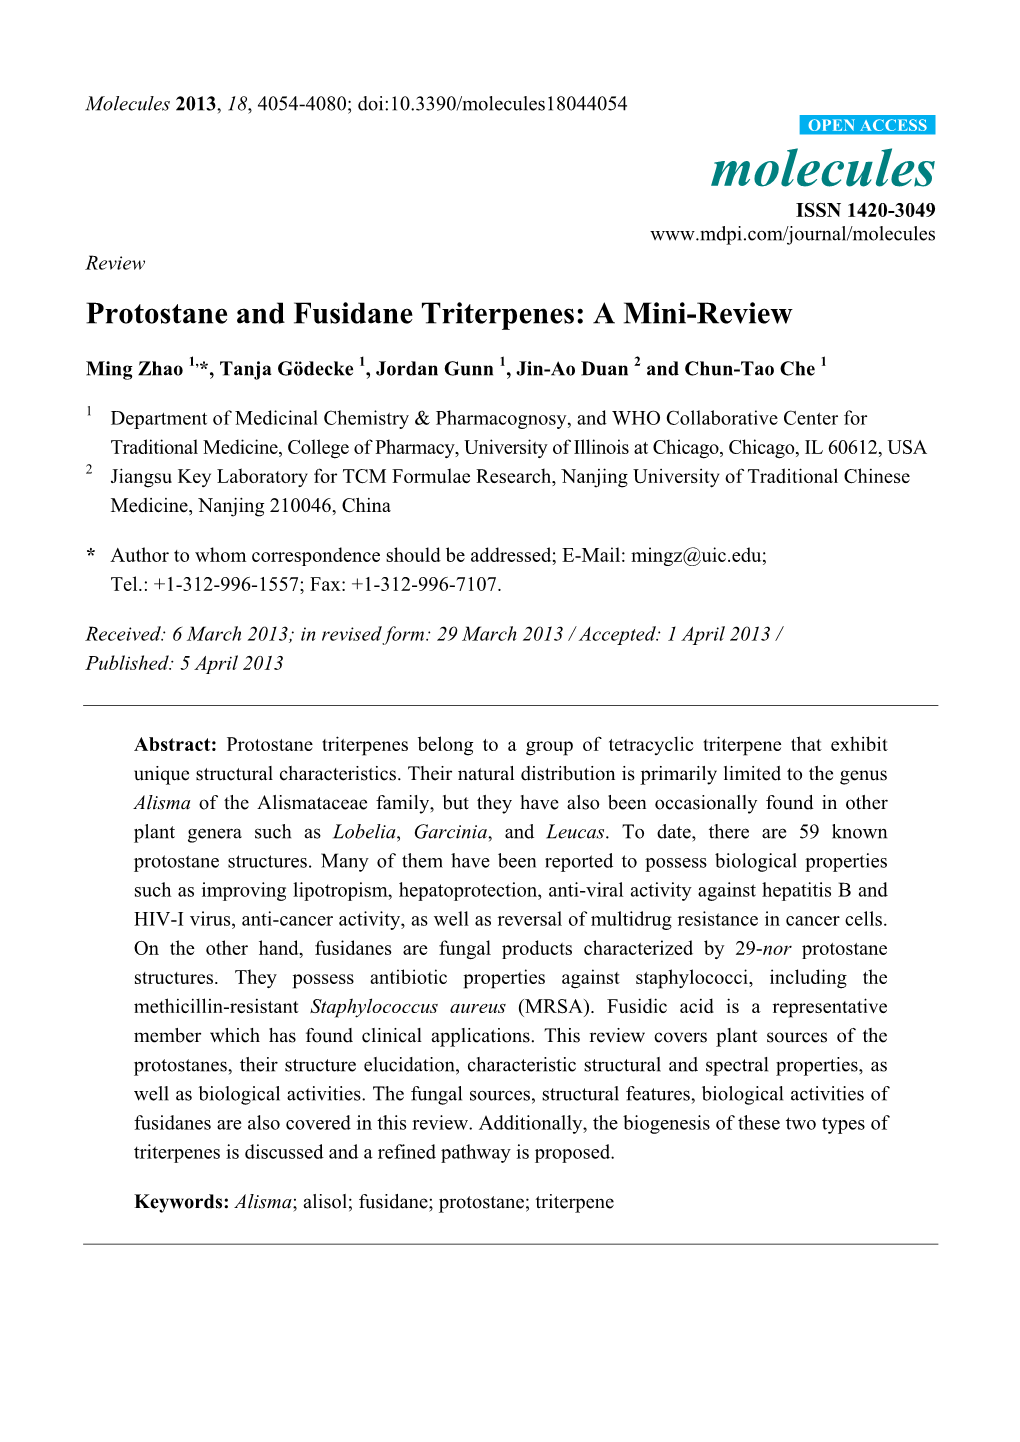 Protostane and Fusidane Triterpenes: a Mini-Review